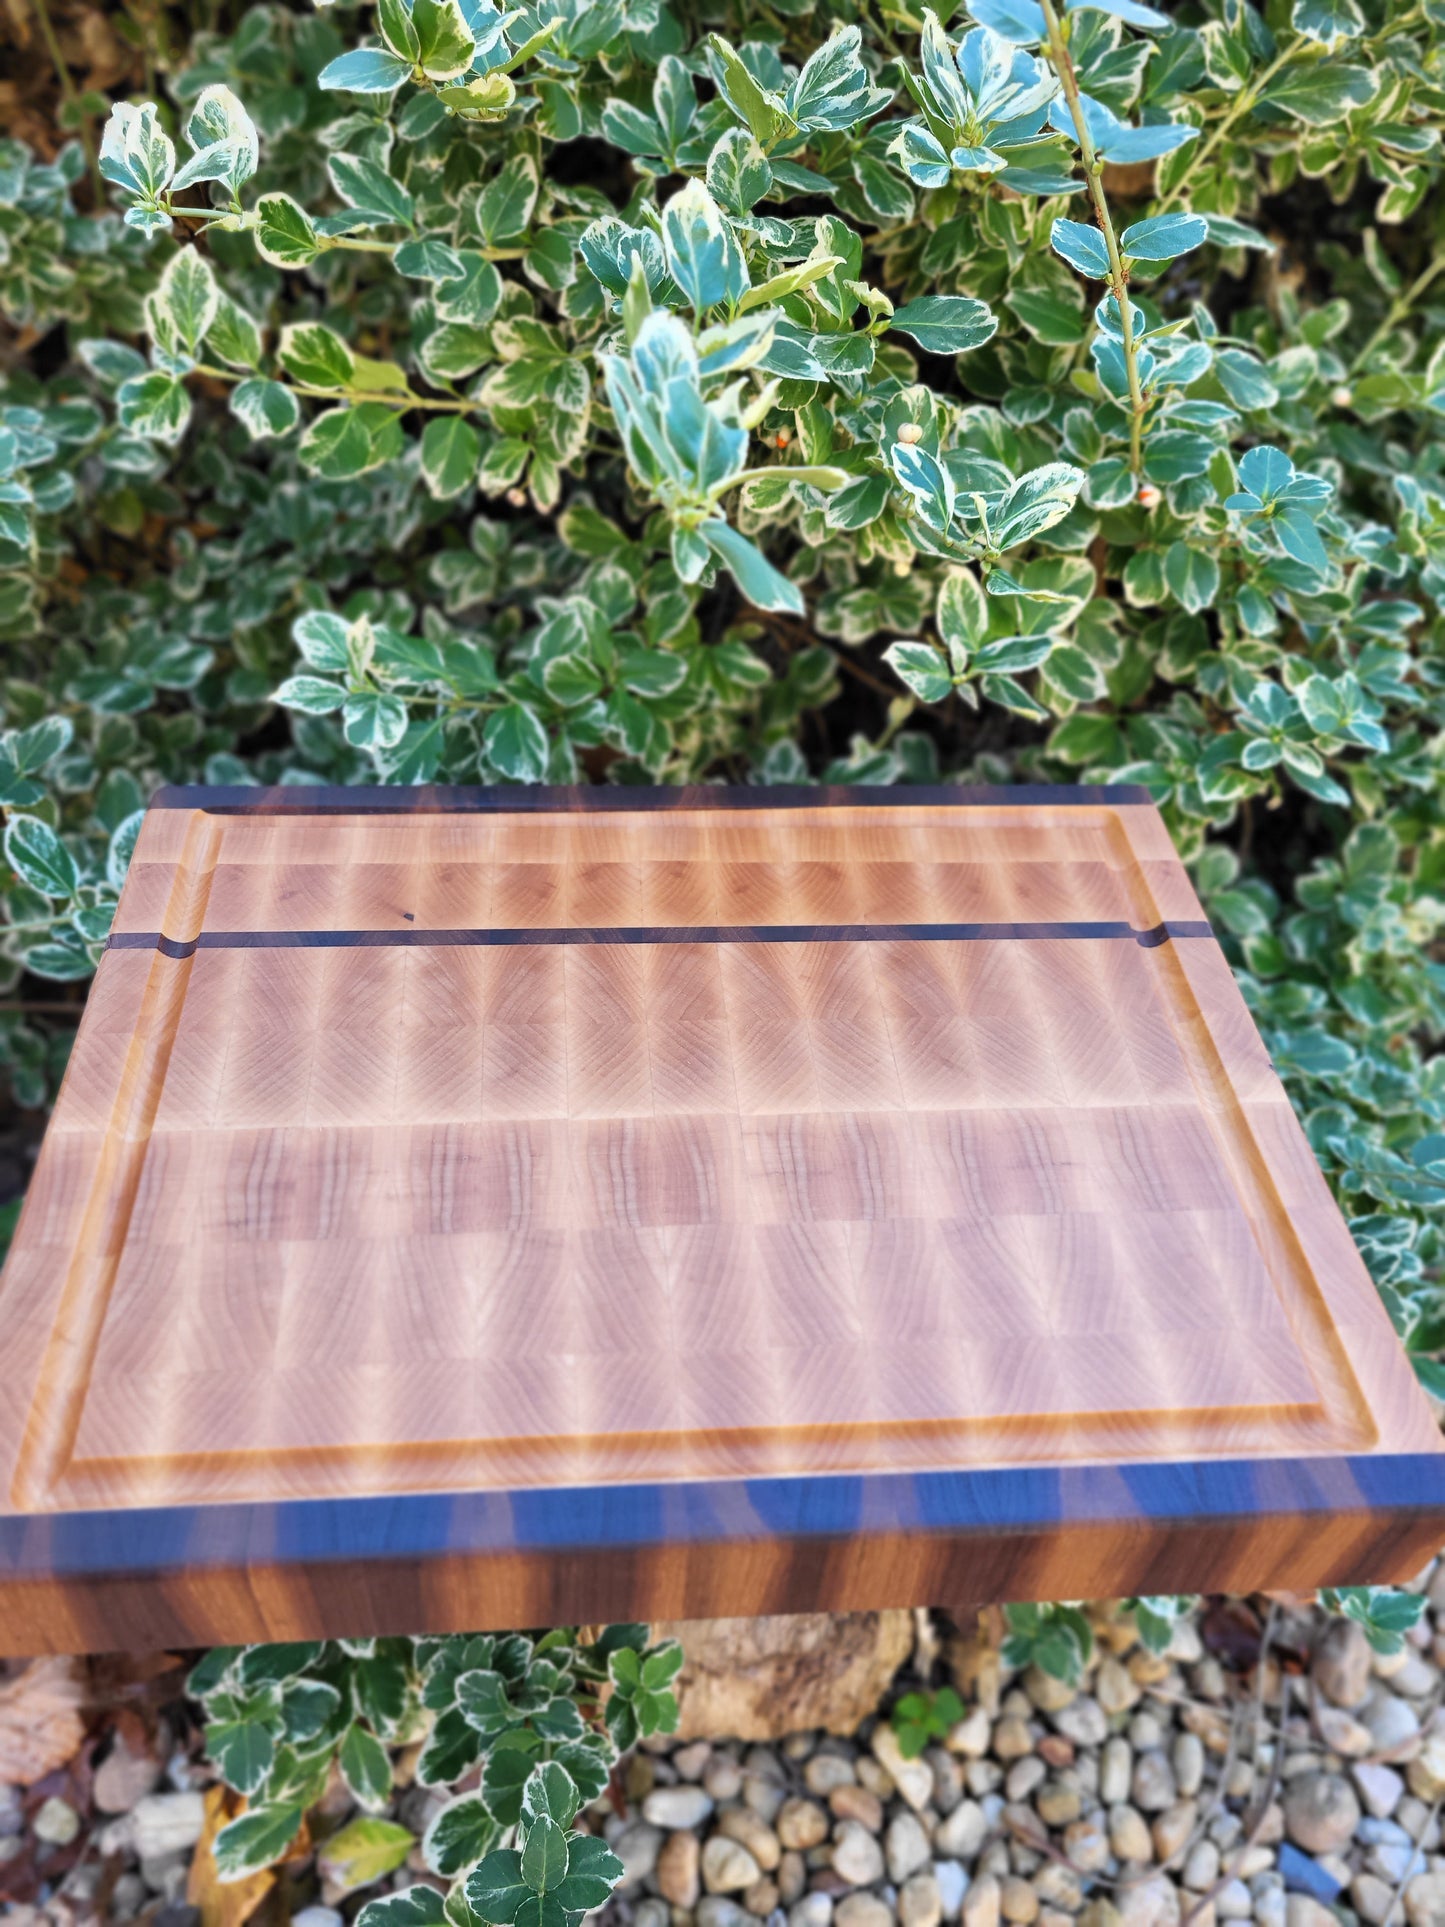 Hard Maple & Walnut End-Grain Cutting Board